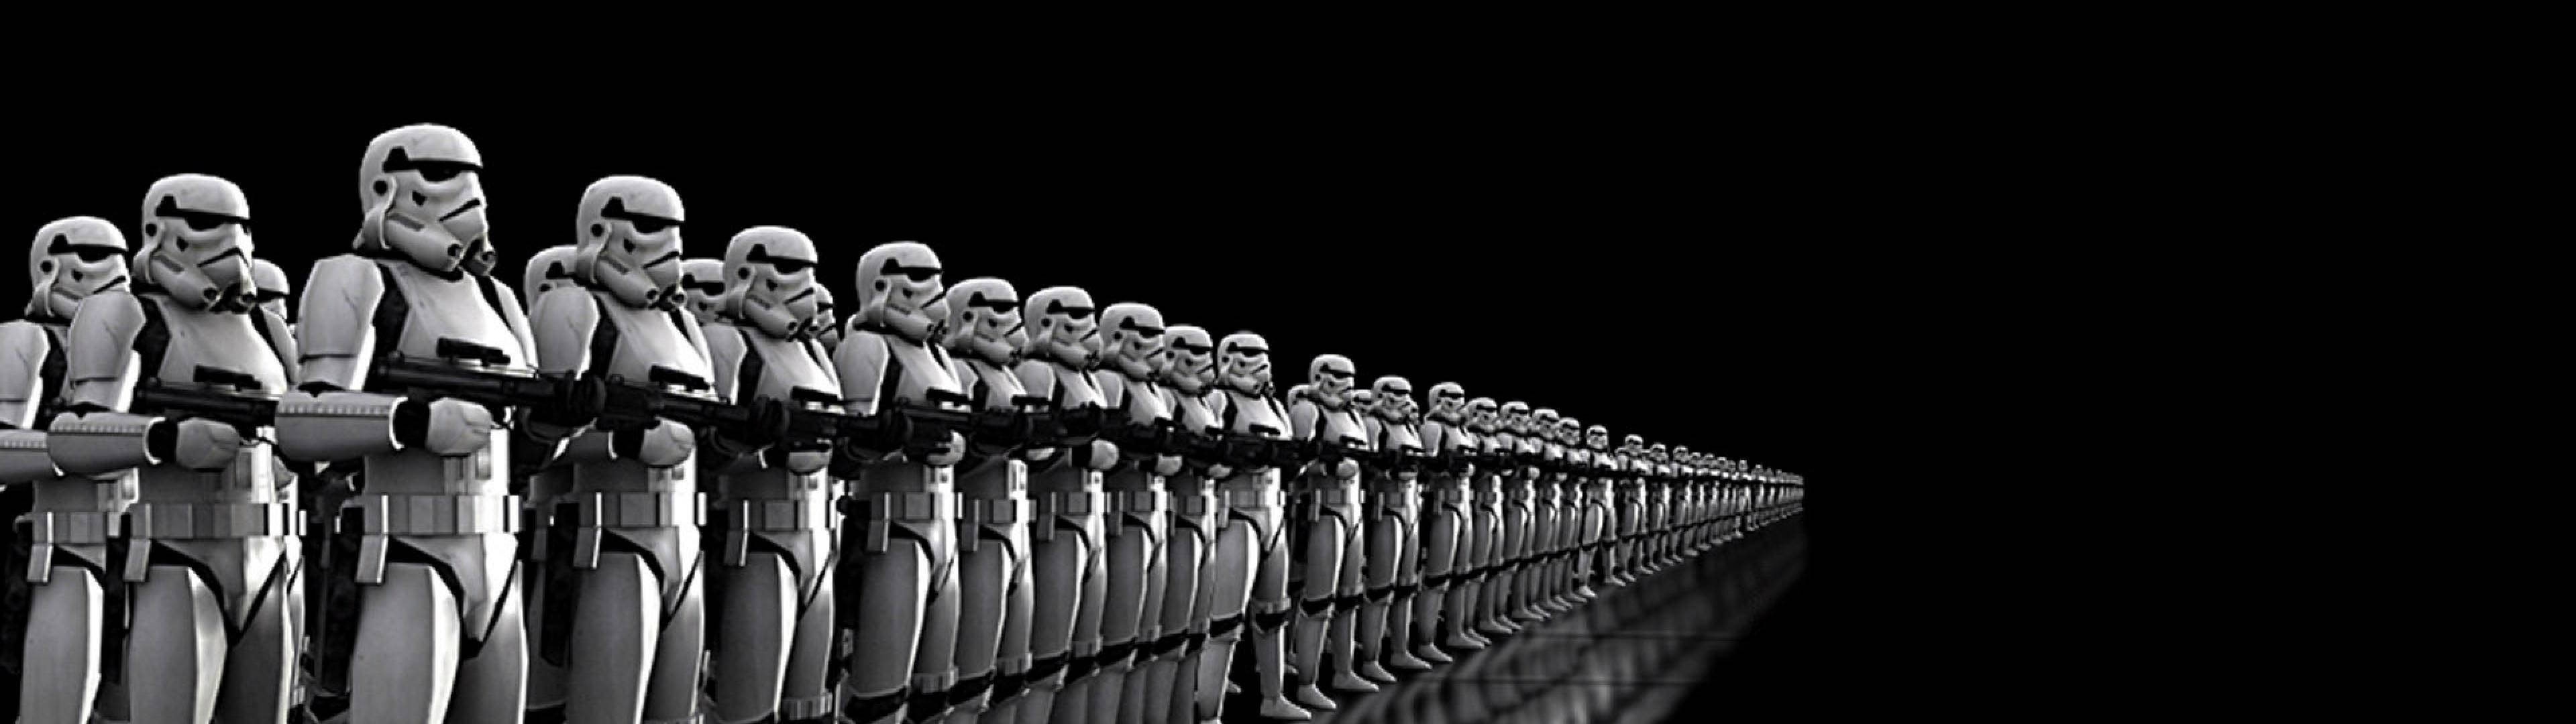 Star Wars Dual Screen Stormtroopers Wallpaper